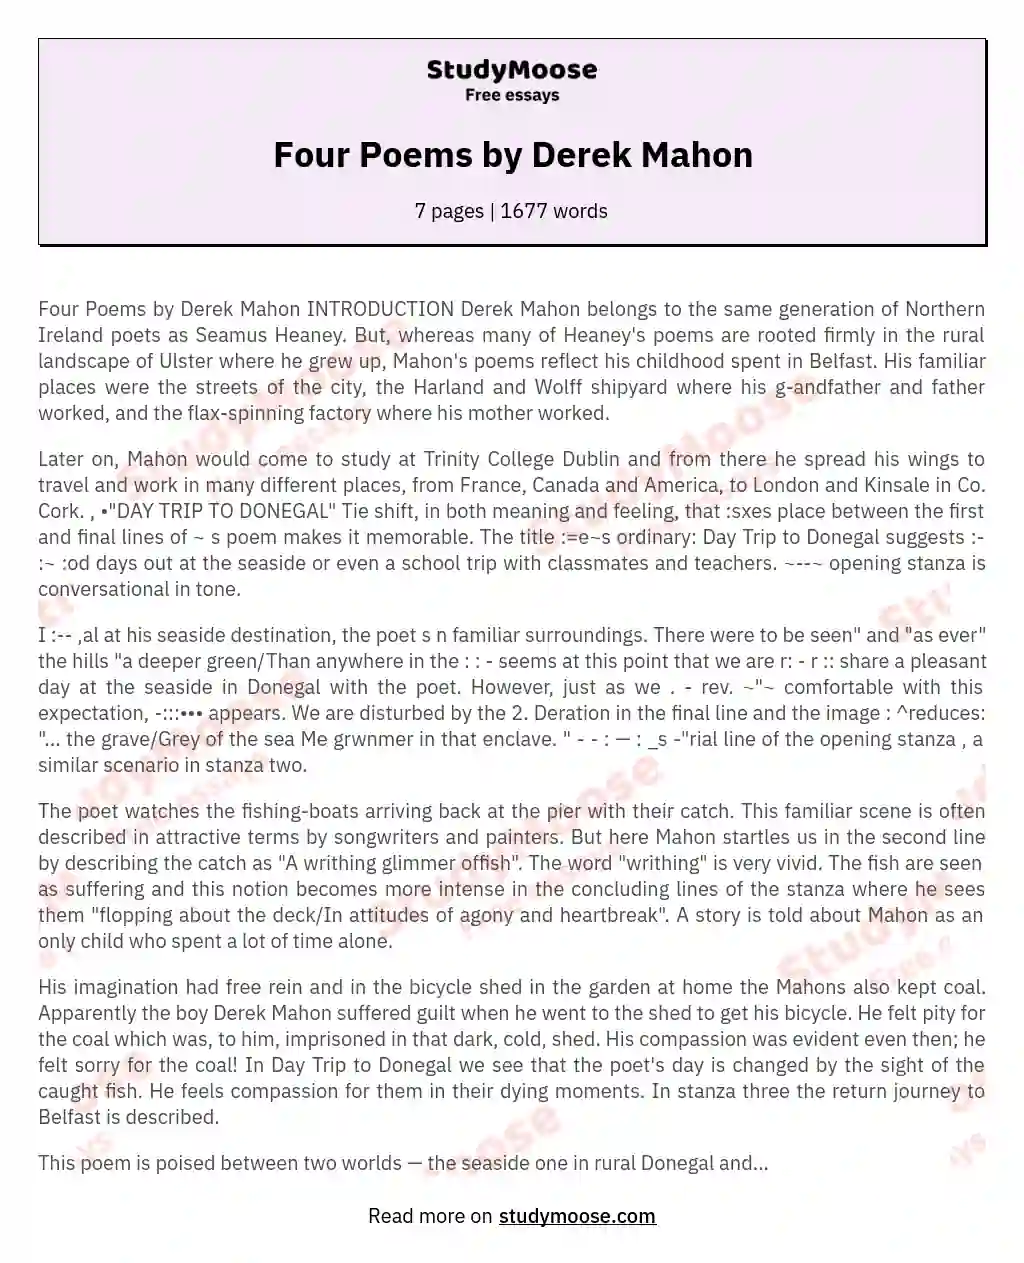 Four Poems by Derek Mahon essay